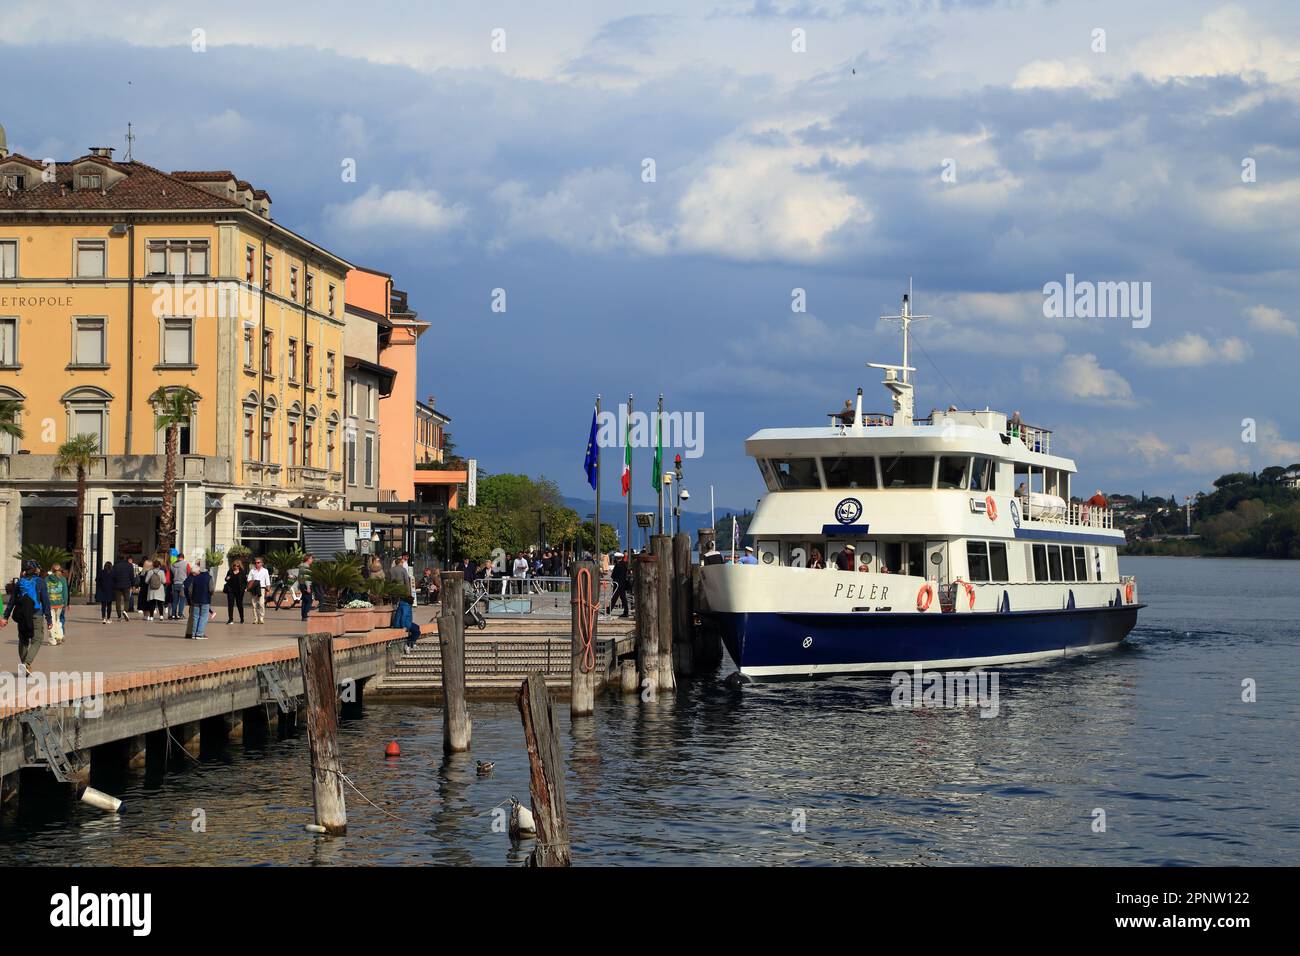 Ferry boat Pelèr. Salò town. Lake Garda, Lago di Garda, Gardasee Stock Photo